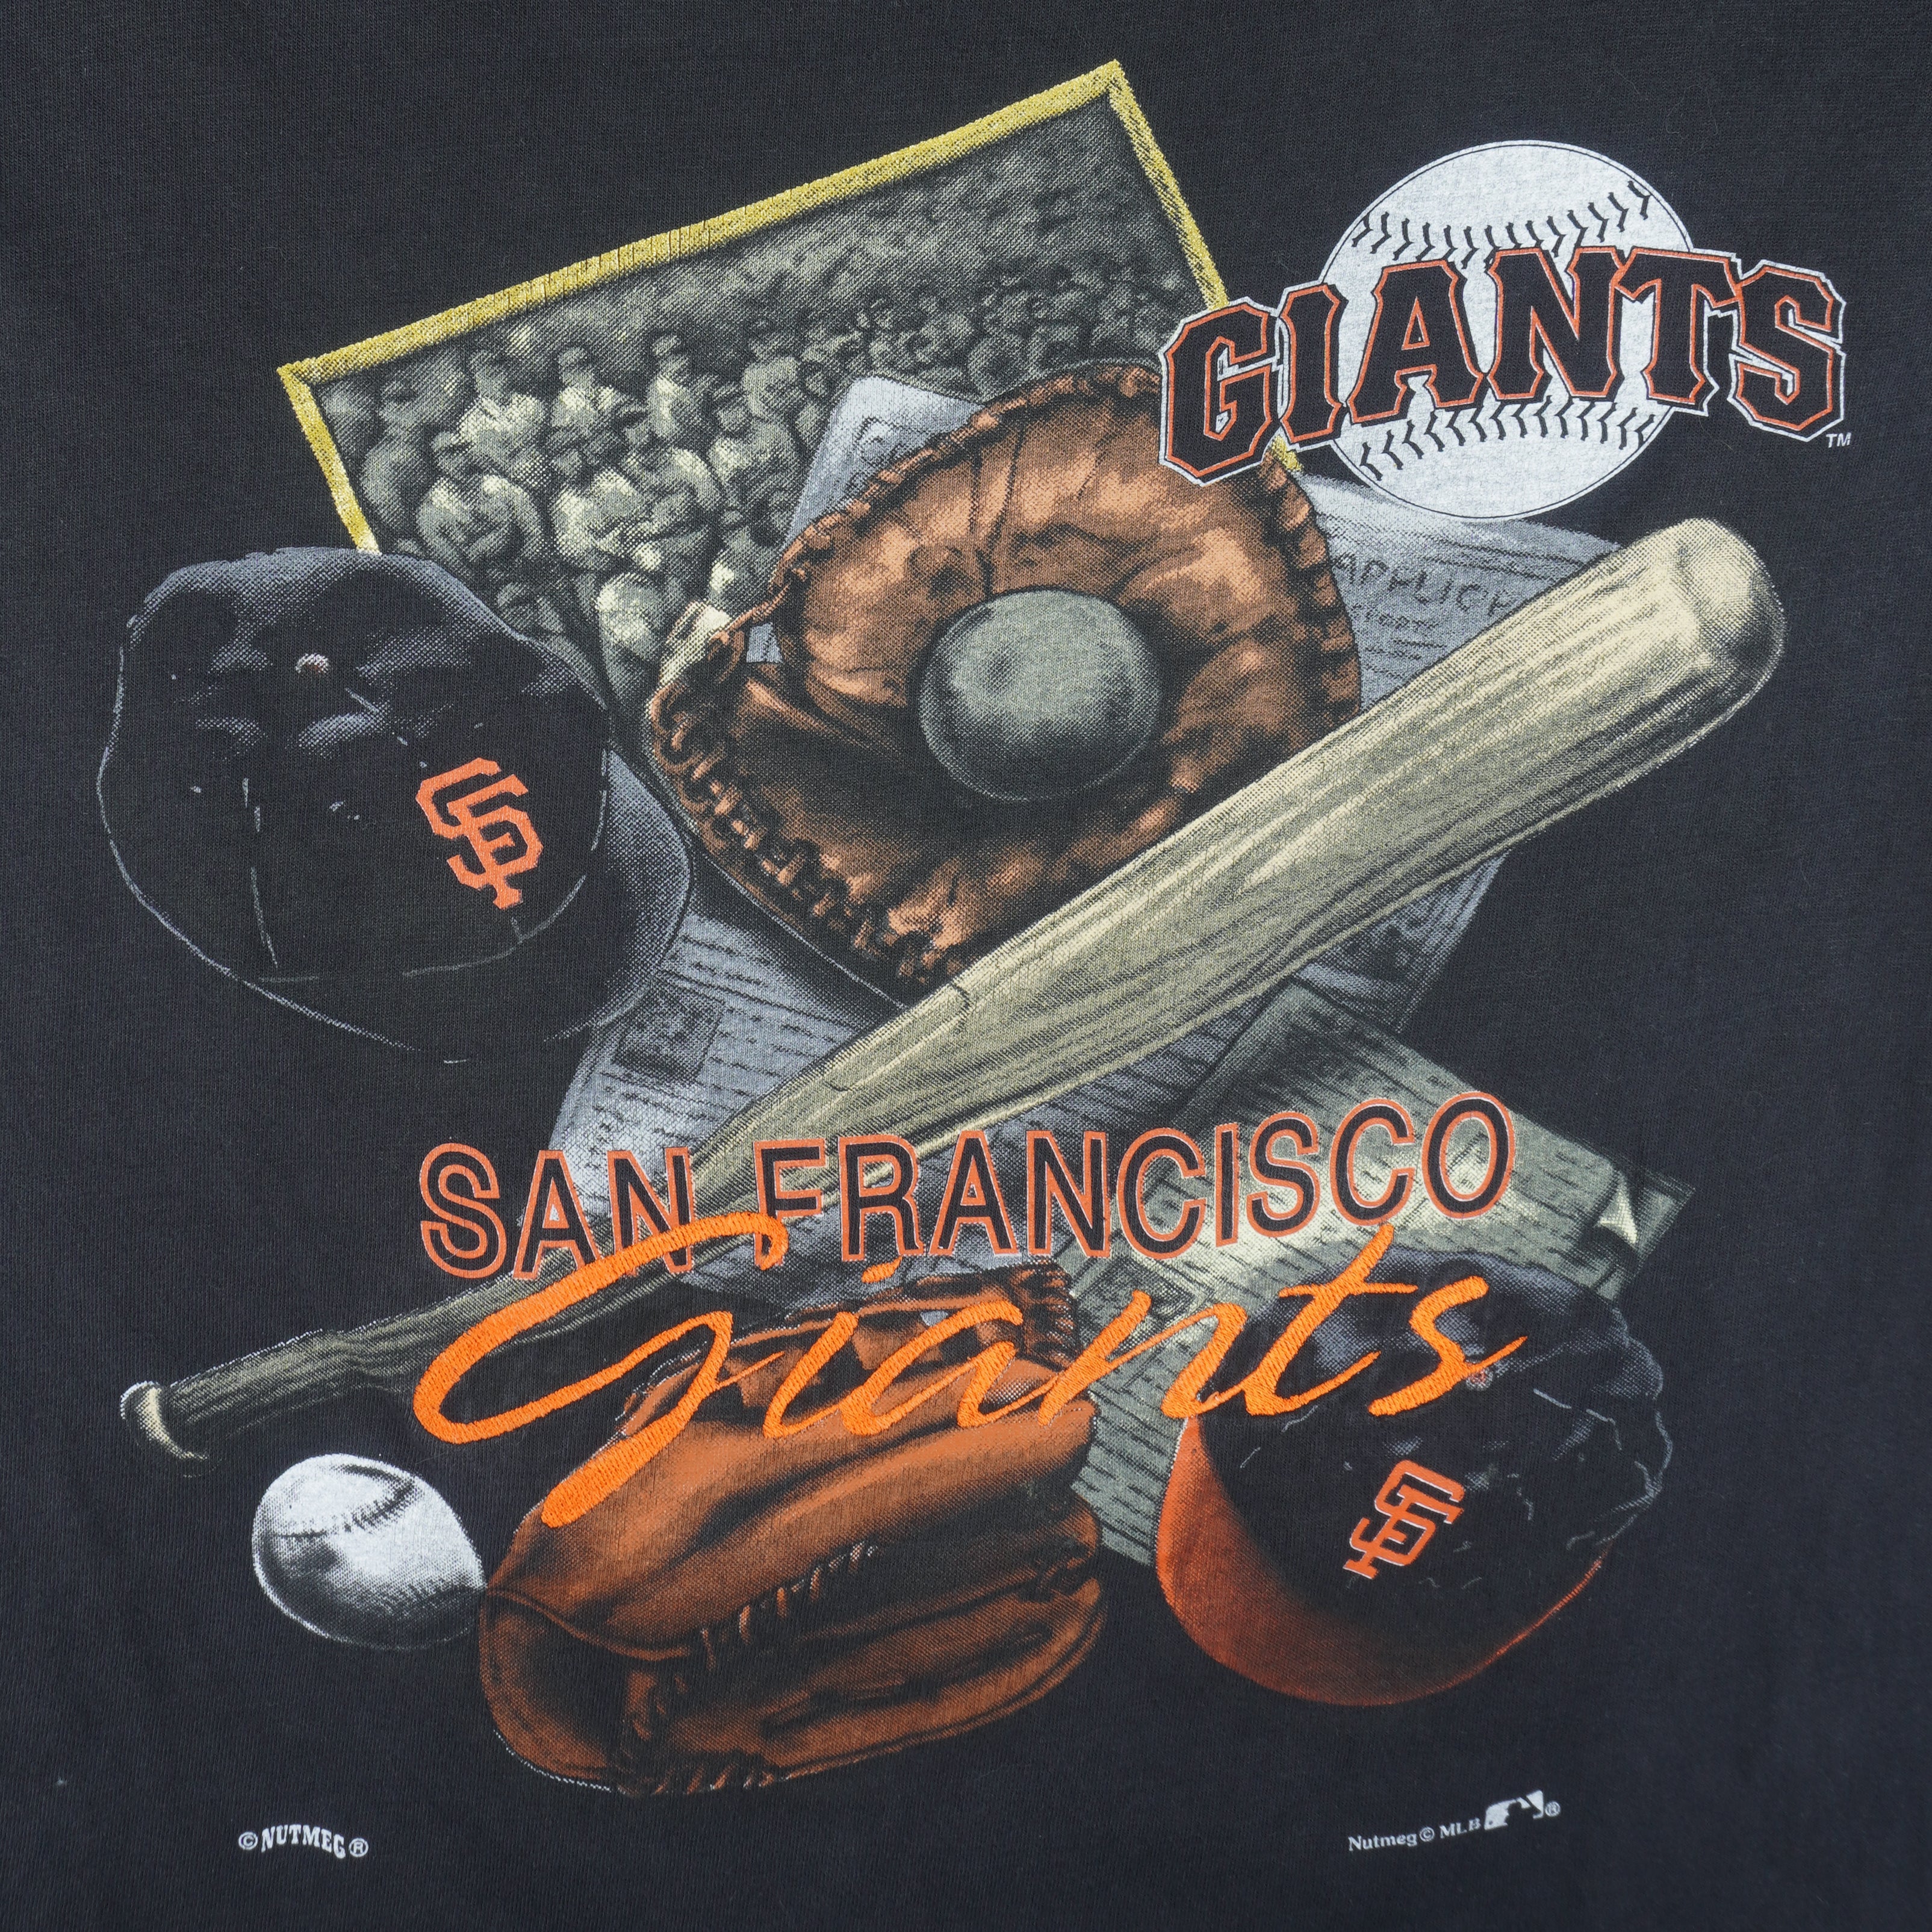 Vintage Taz San Francisco Giants Tee Shirt